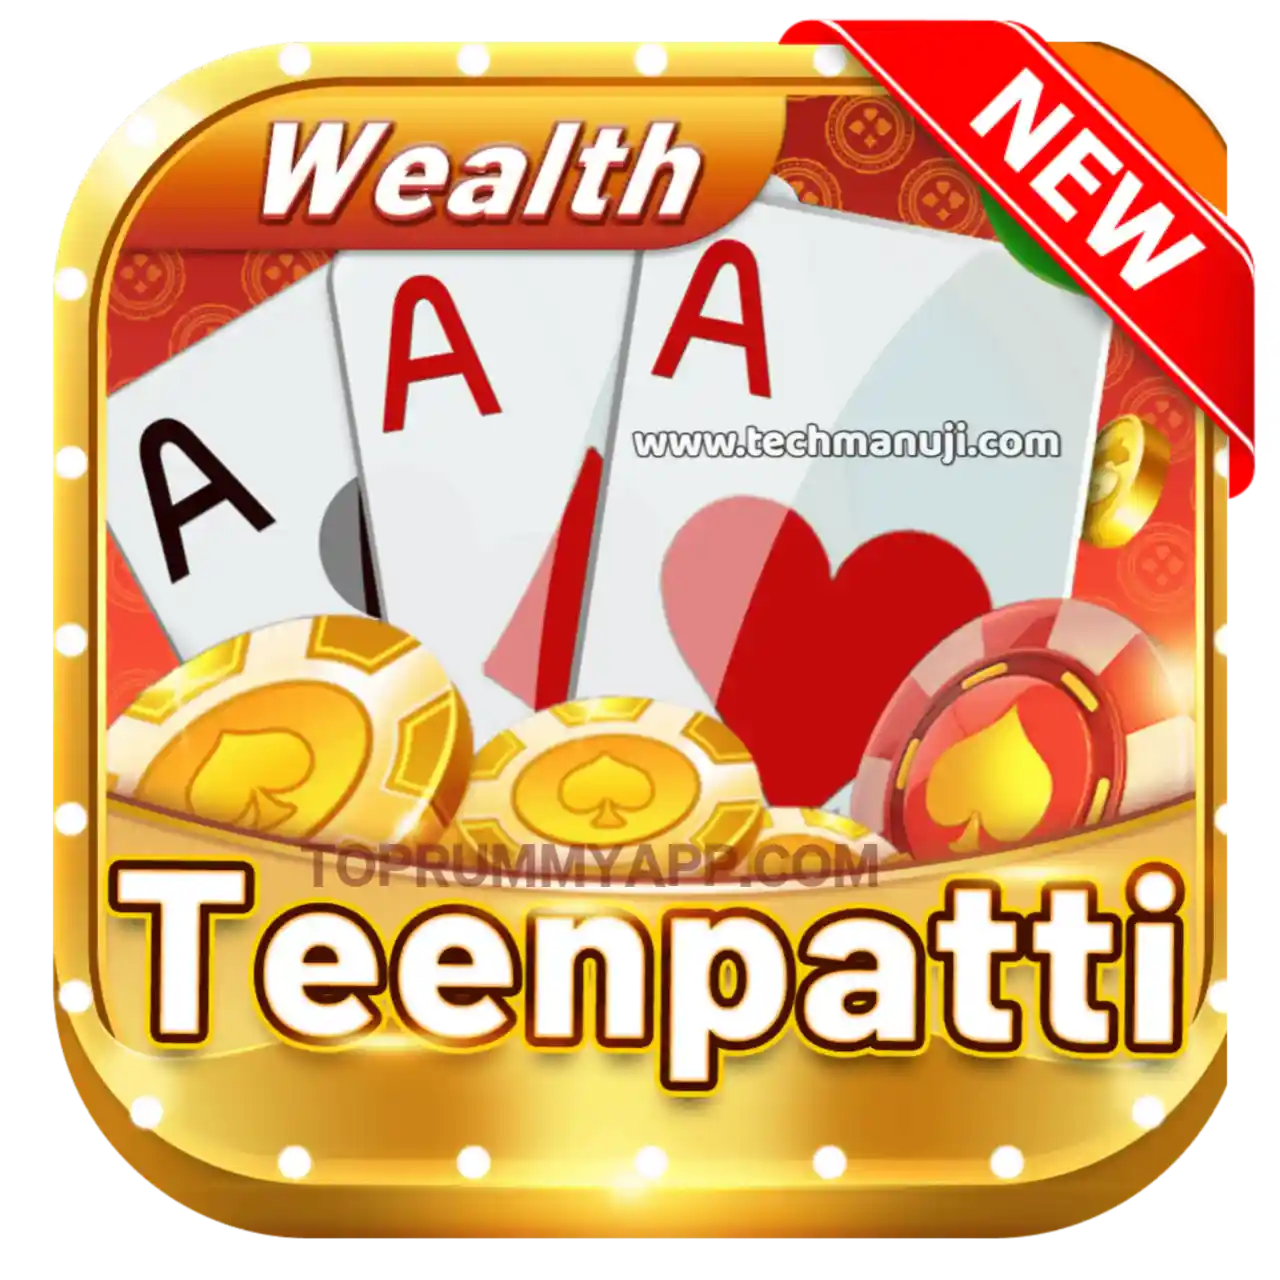 Teen Patti Wealth App Download - Teen Patti Party Apk Download